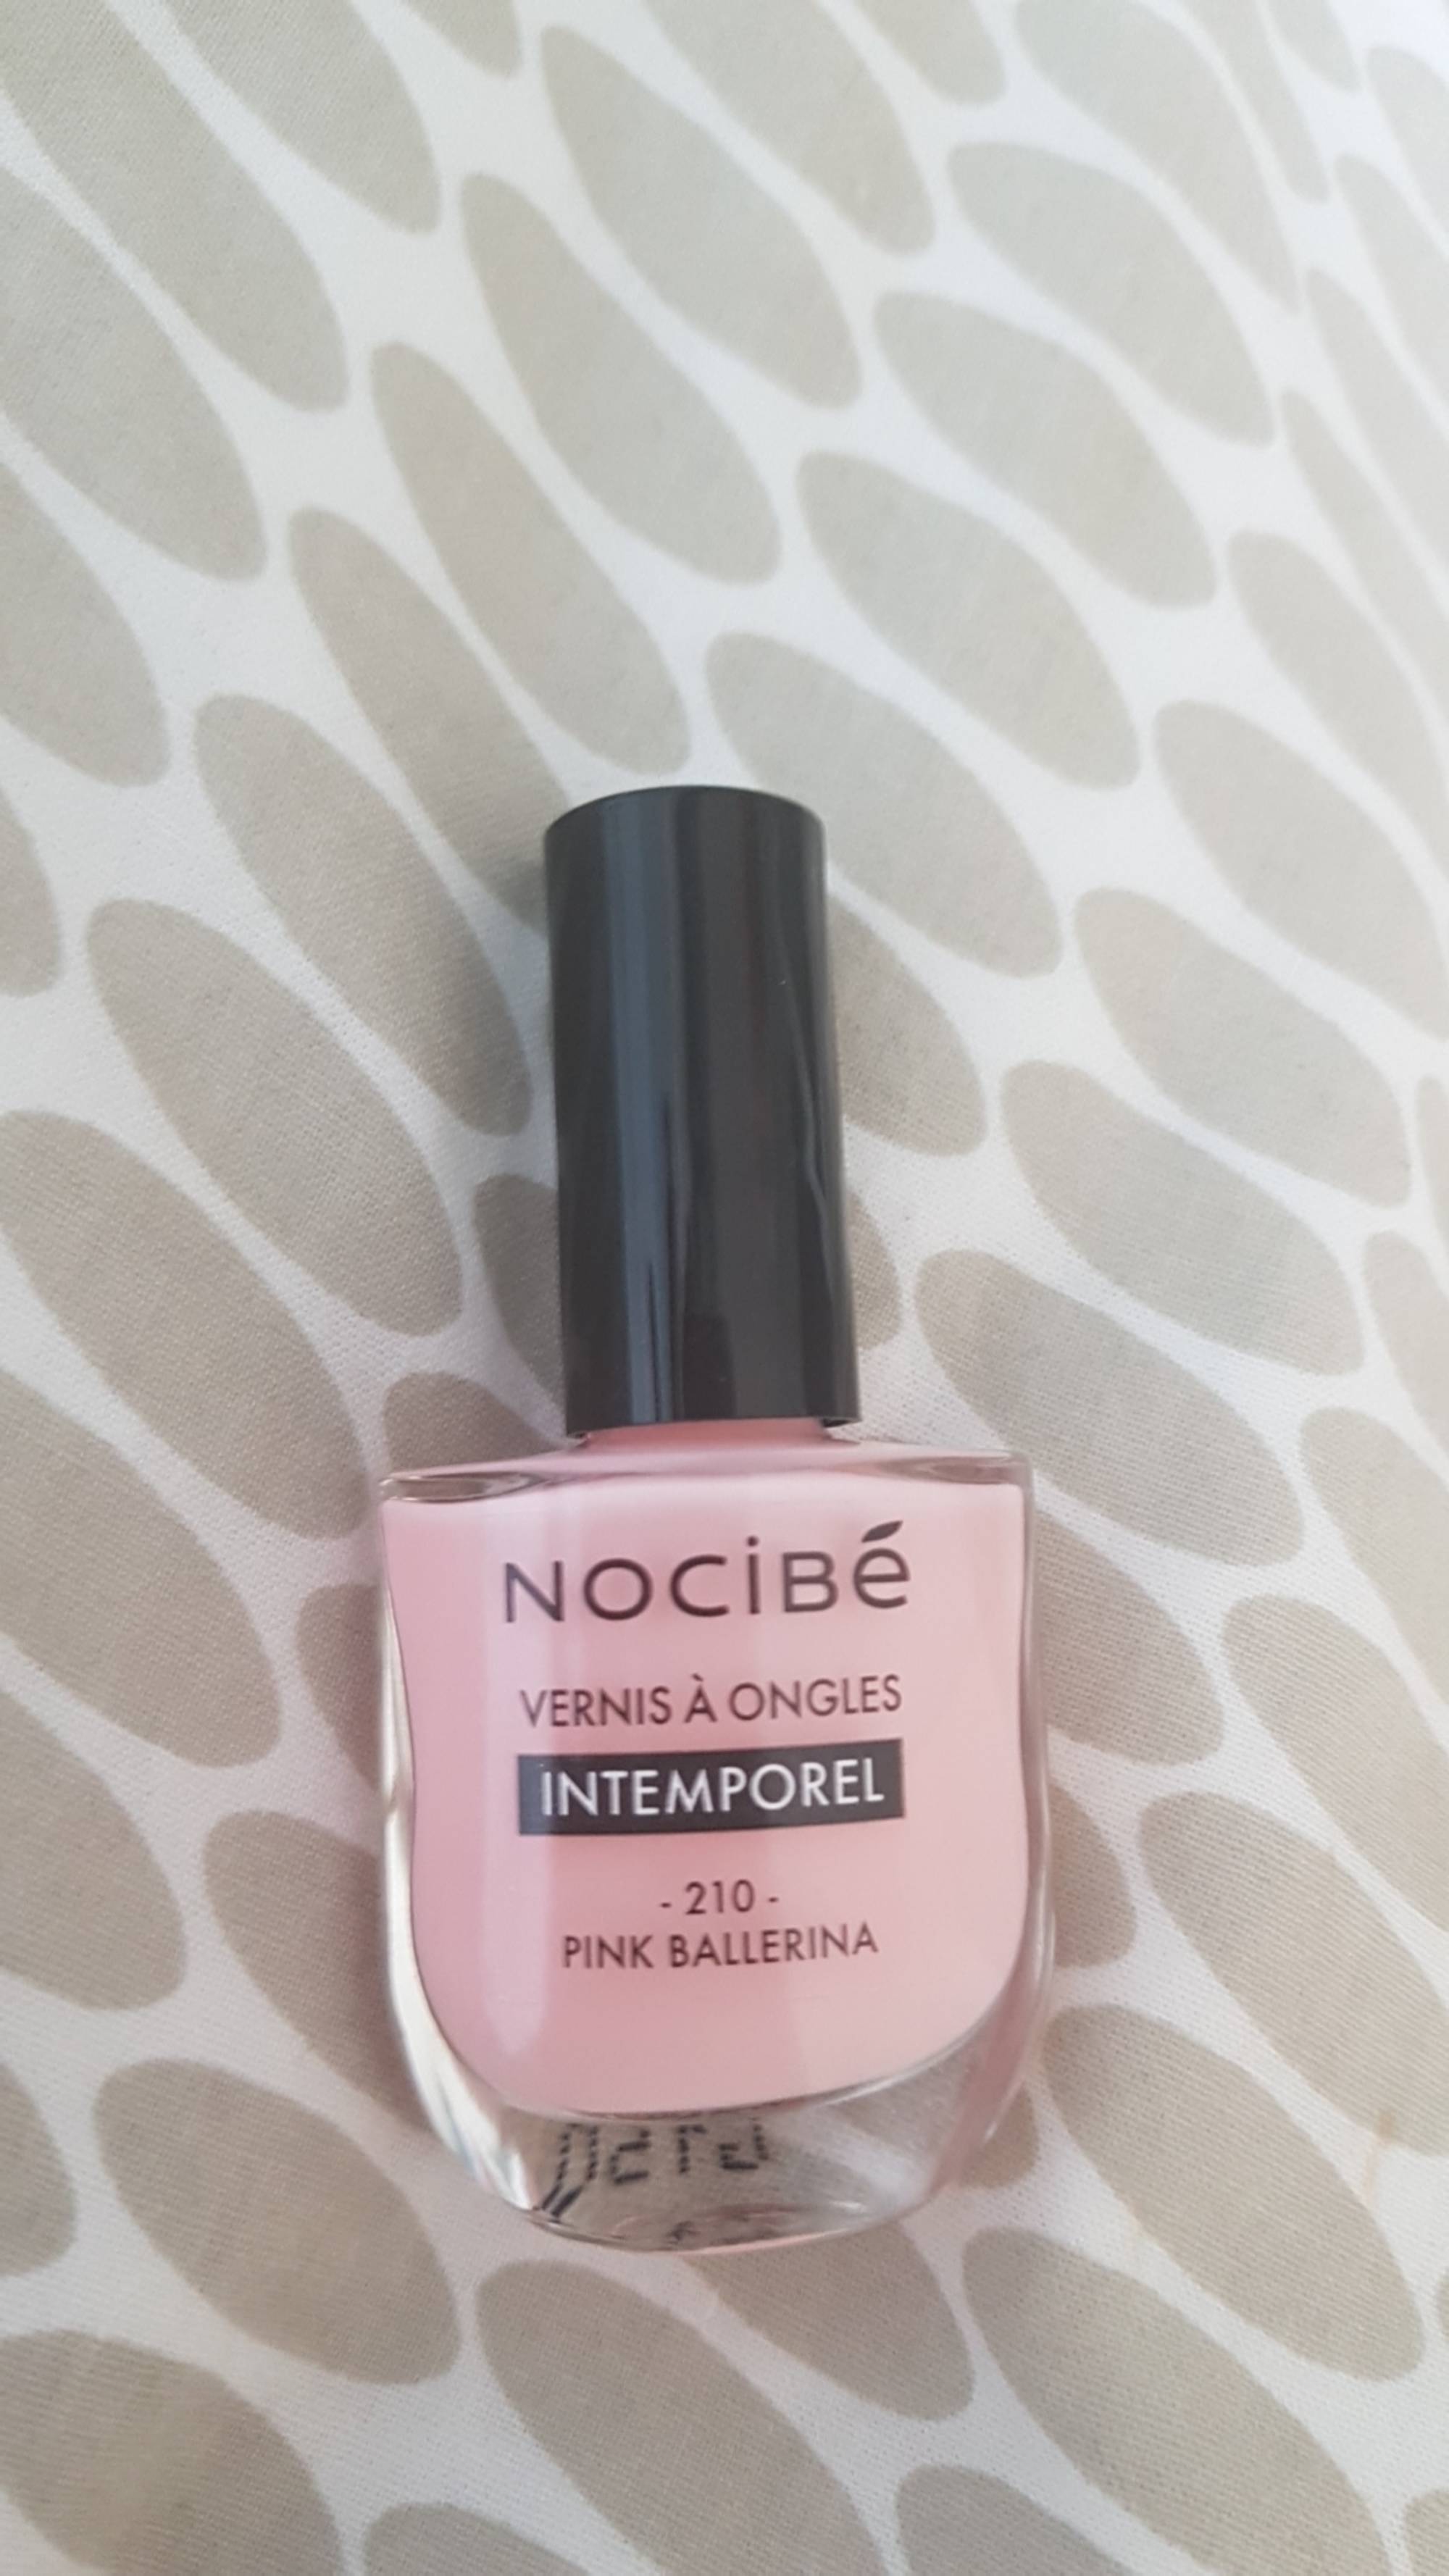 NOCIBÉ - Intemporel Verni à ongles 210 pink ballerina